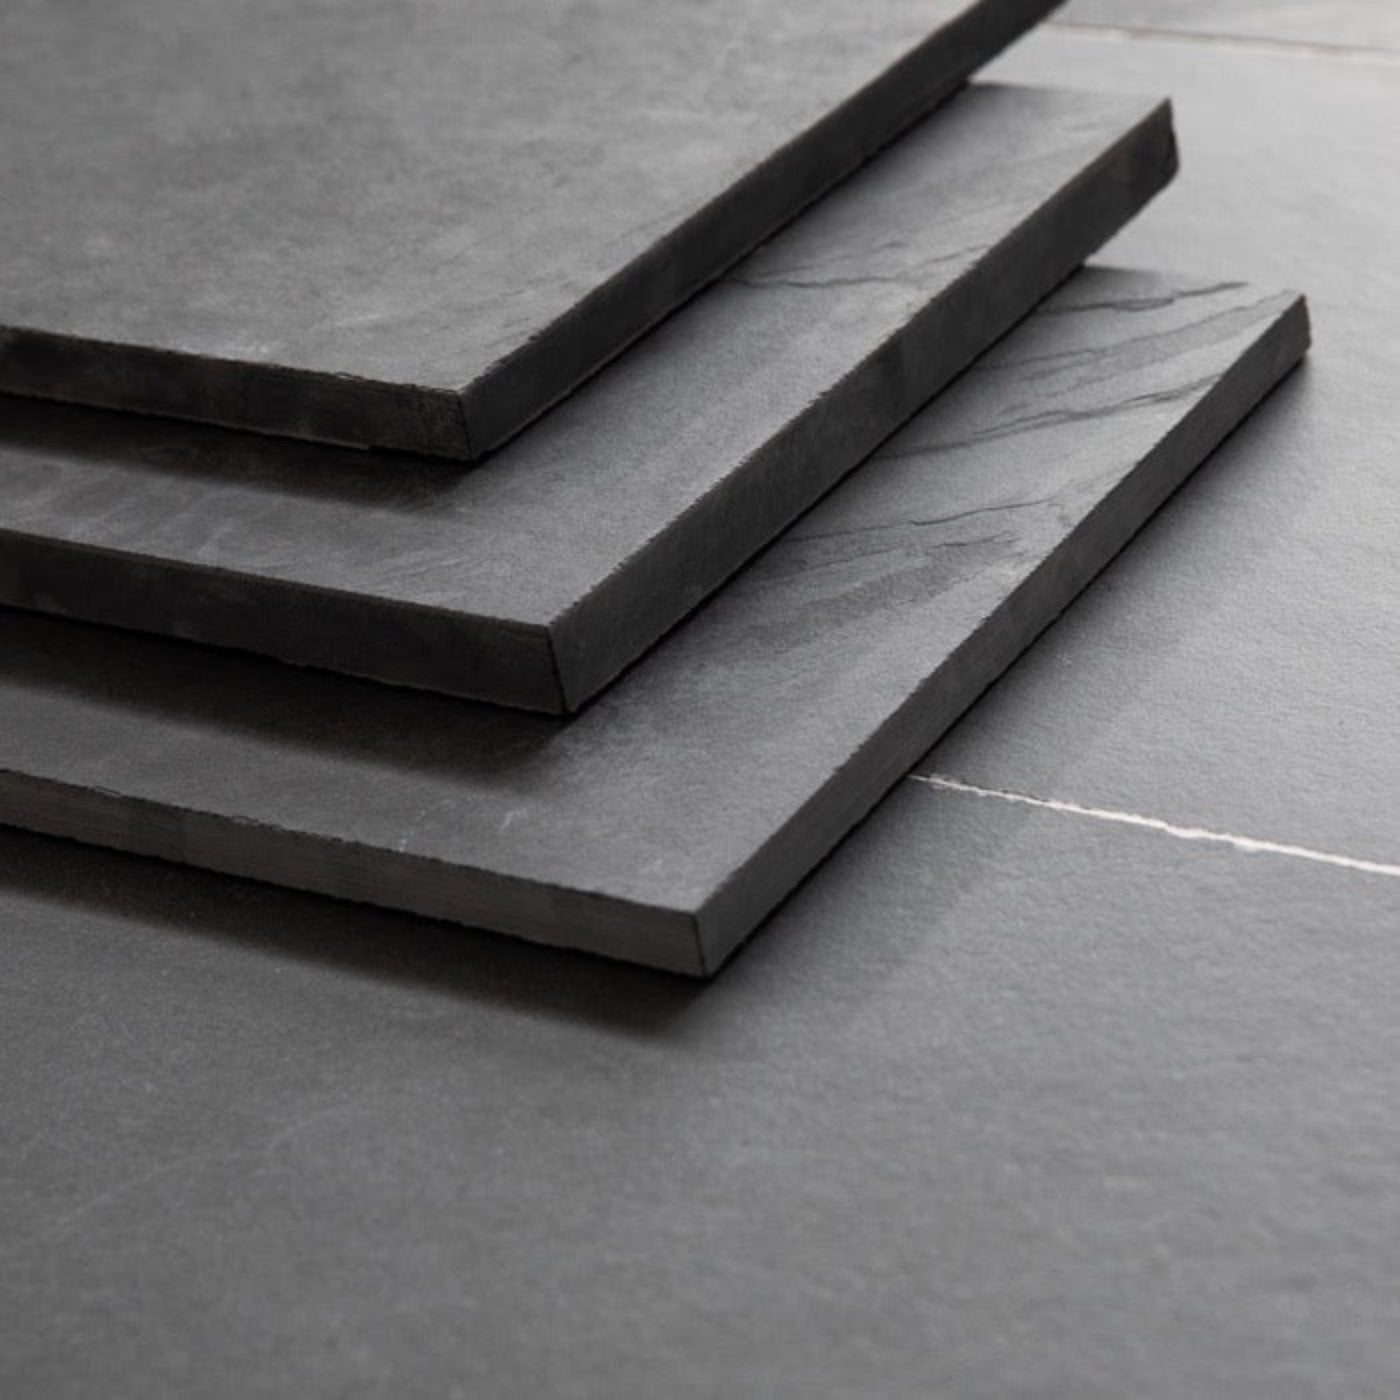 Black Slate Paving Patio Slabs | 900 x 600 x 20 mm slabs | £29.88 each collect Milton Keynes